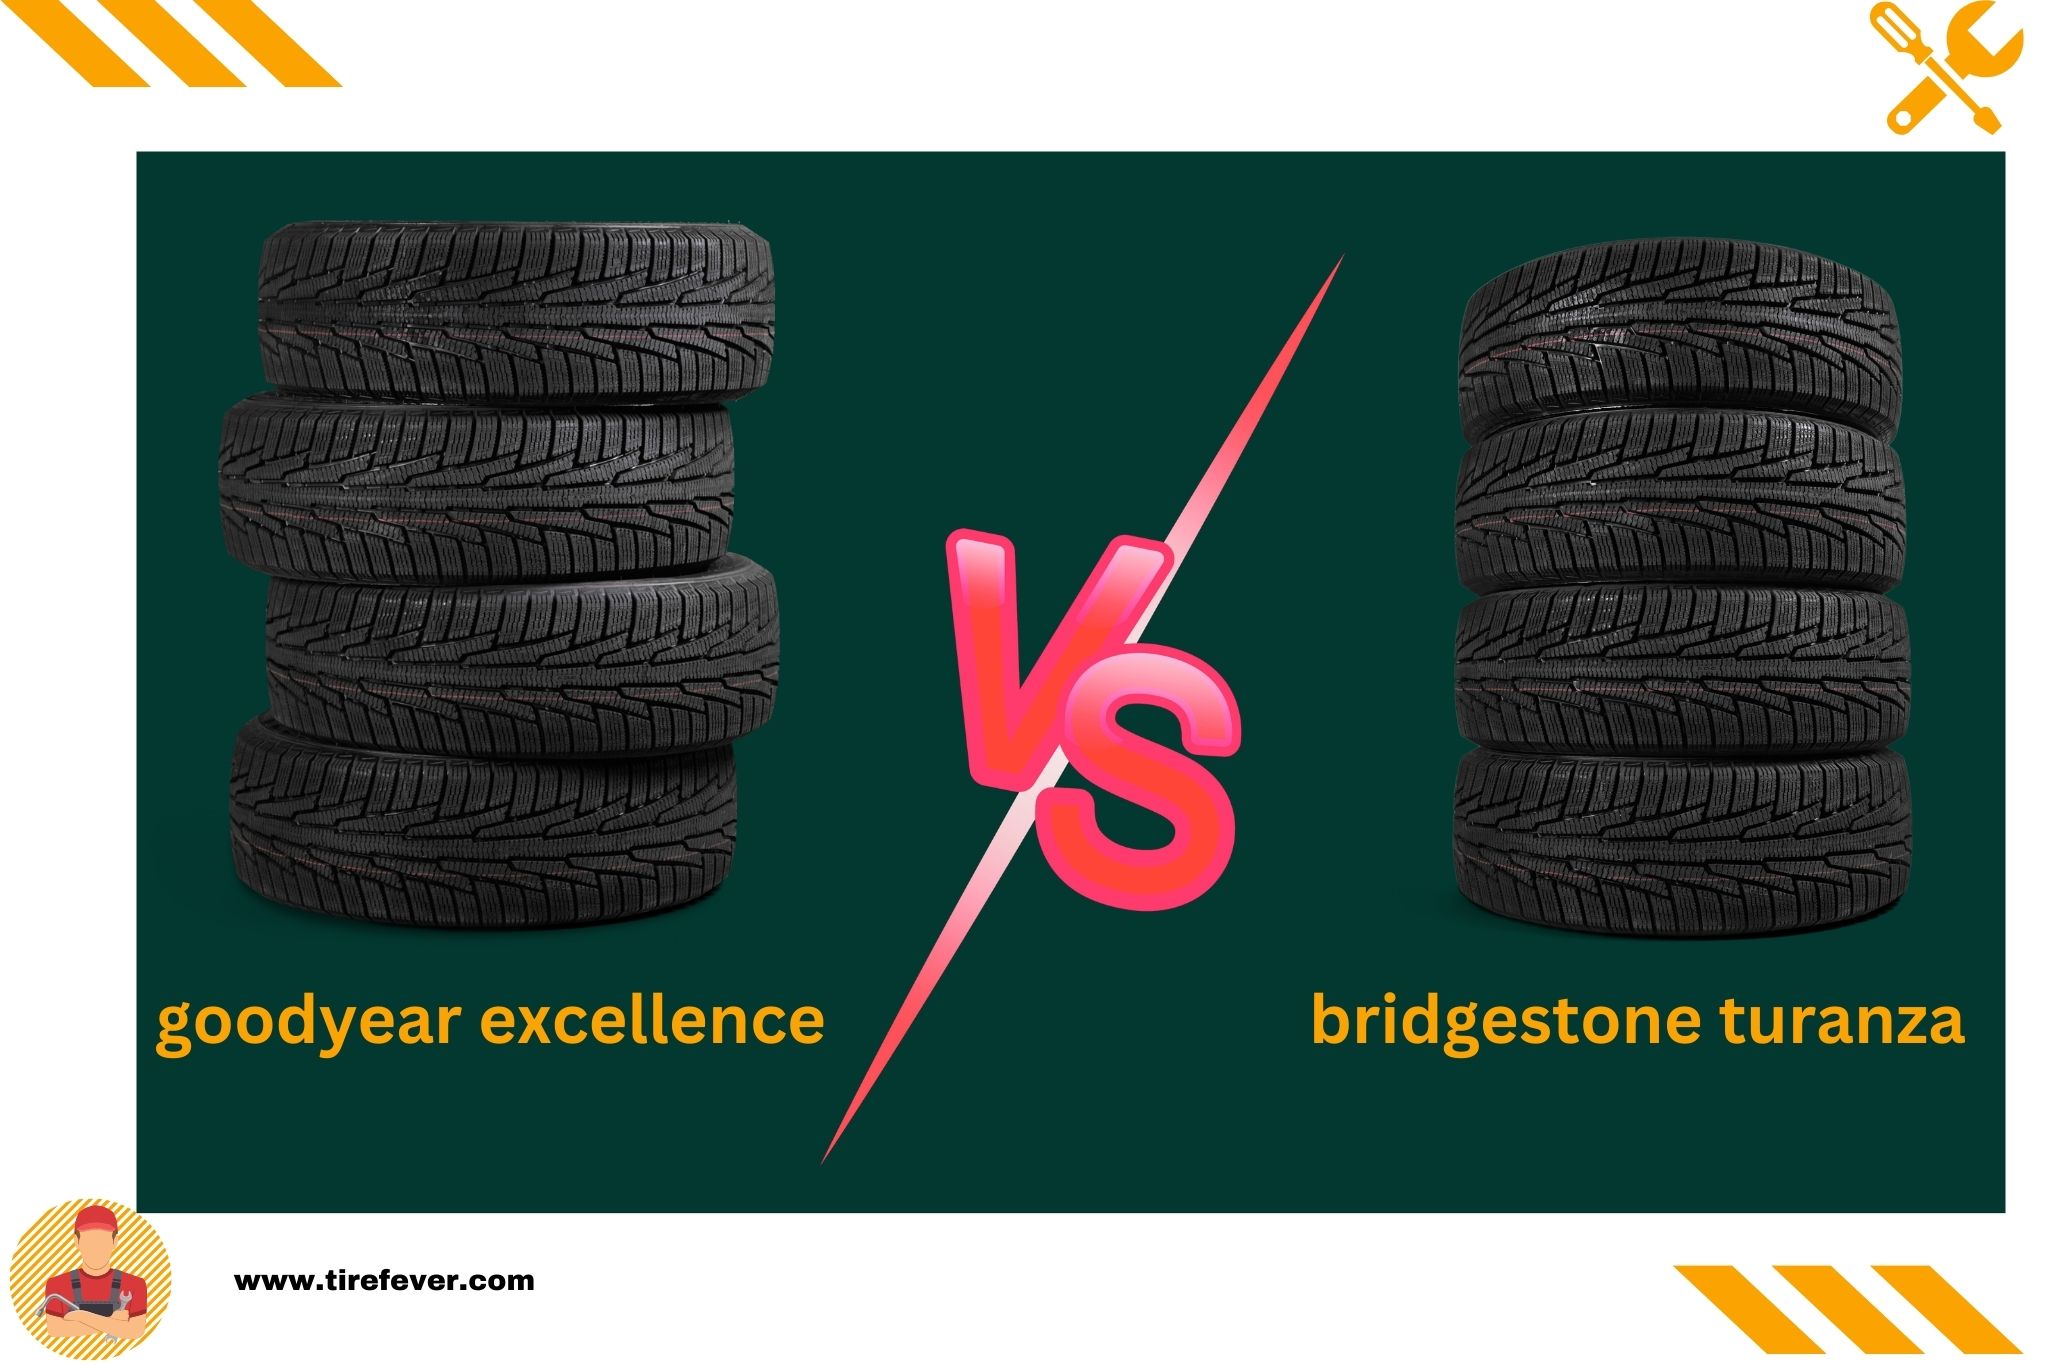 goodyear excellence vs bridgestone turanza